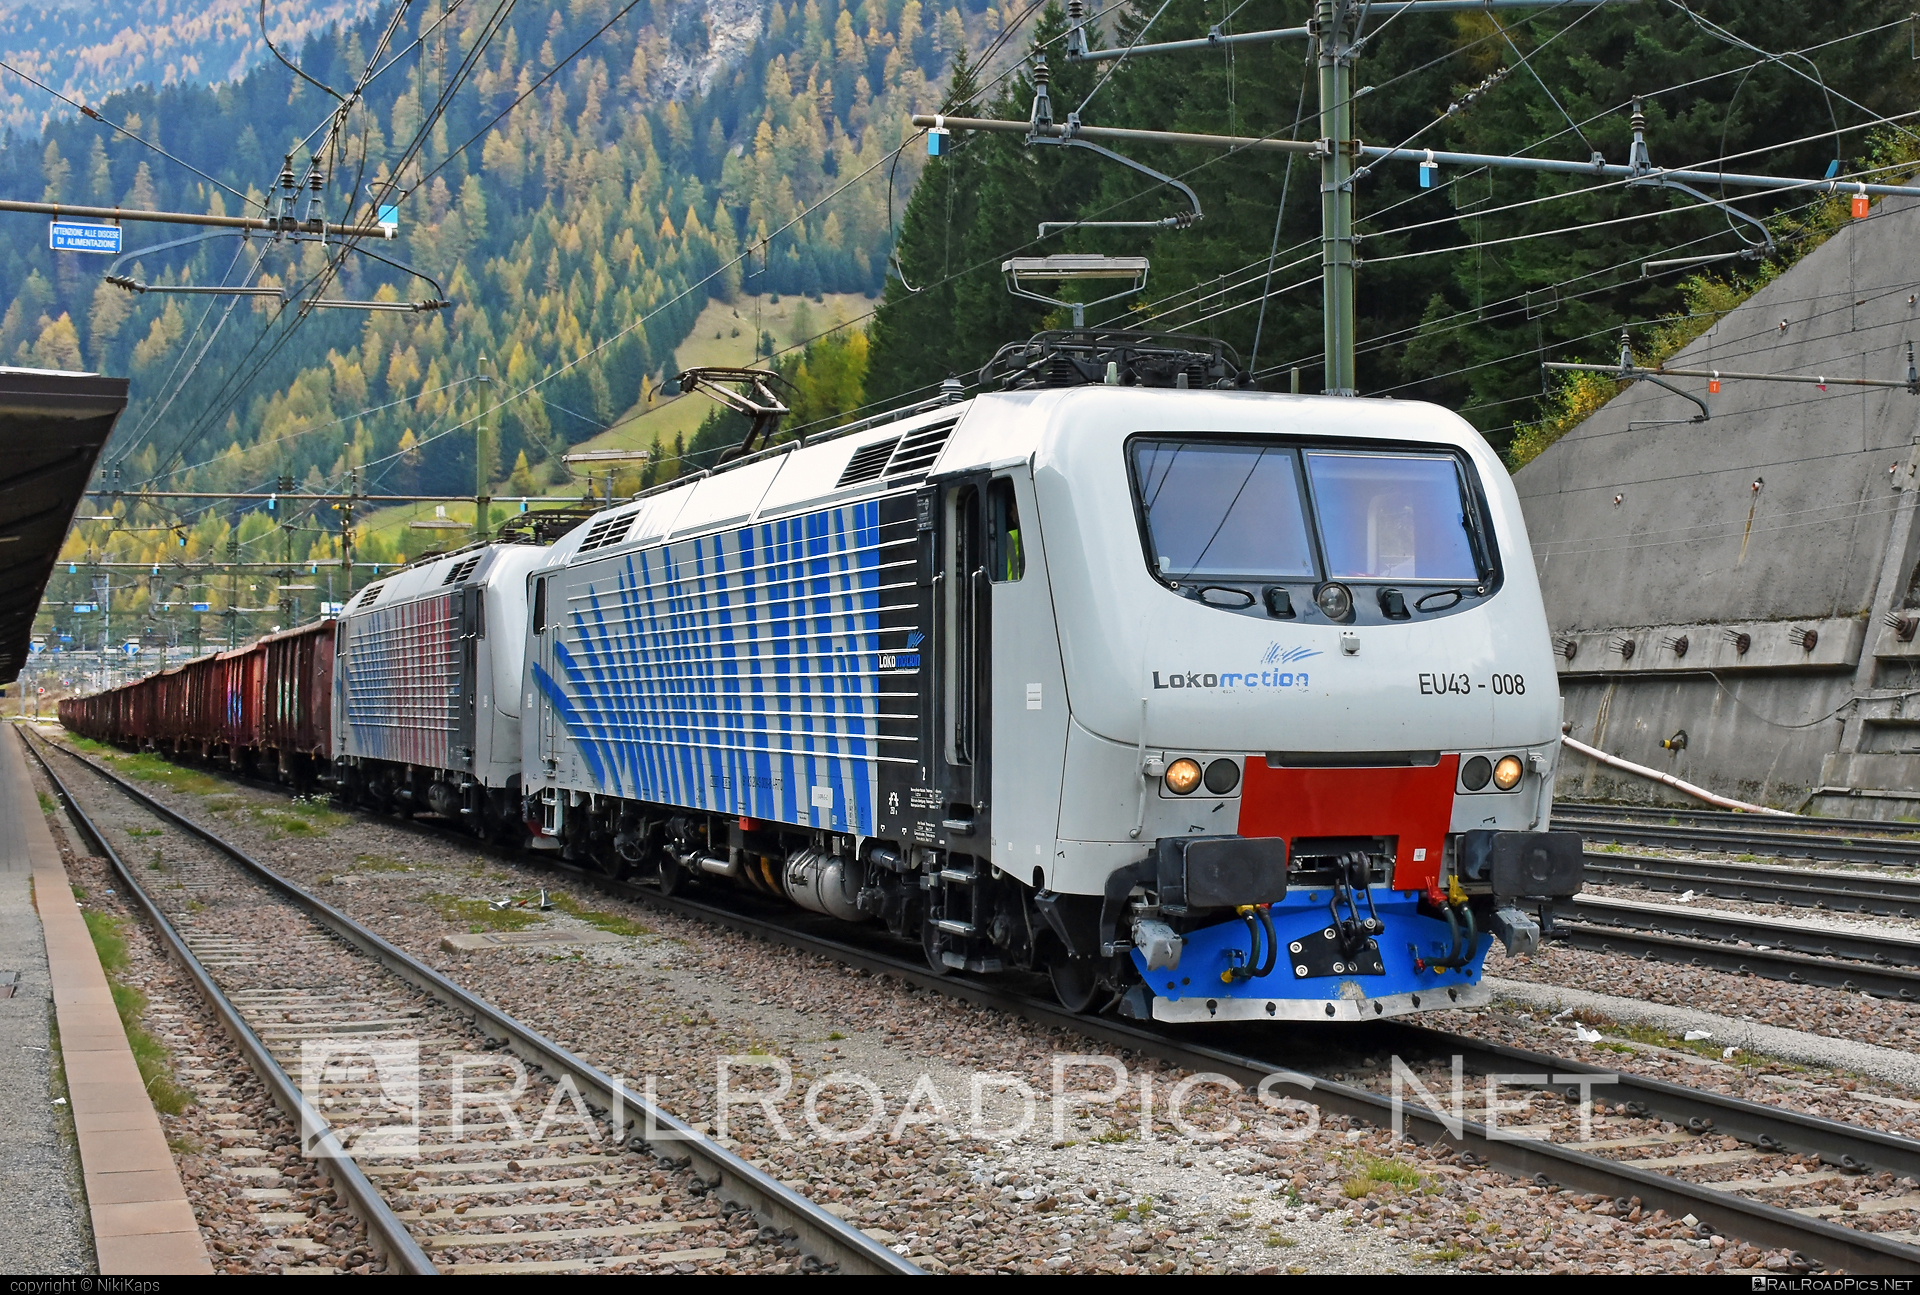 FS Class E.412 - EU43-008 operated by Lokomotion Gesellschaft für Schienentraktion mbH #LokomotionGesellschaftFurSchienentraktion #RailTractionCompany #e412 #fsClassE412 #lokomotion #openwagon #rtc